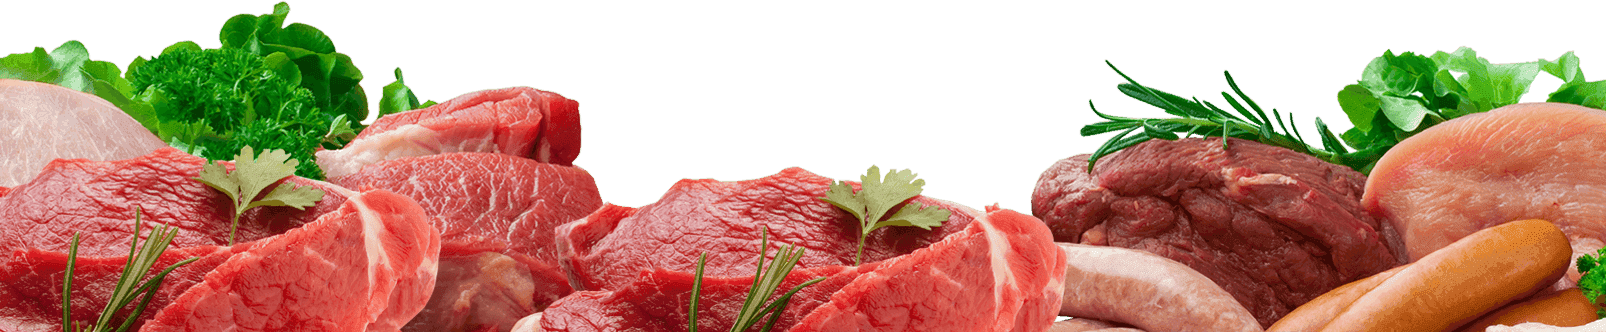 Image result for meat banner